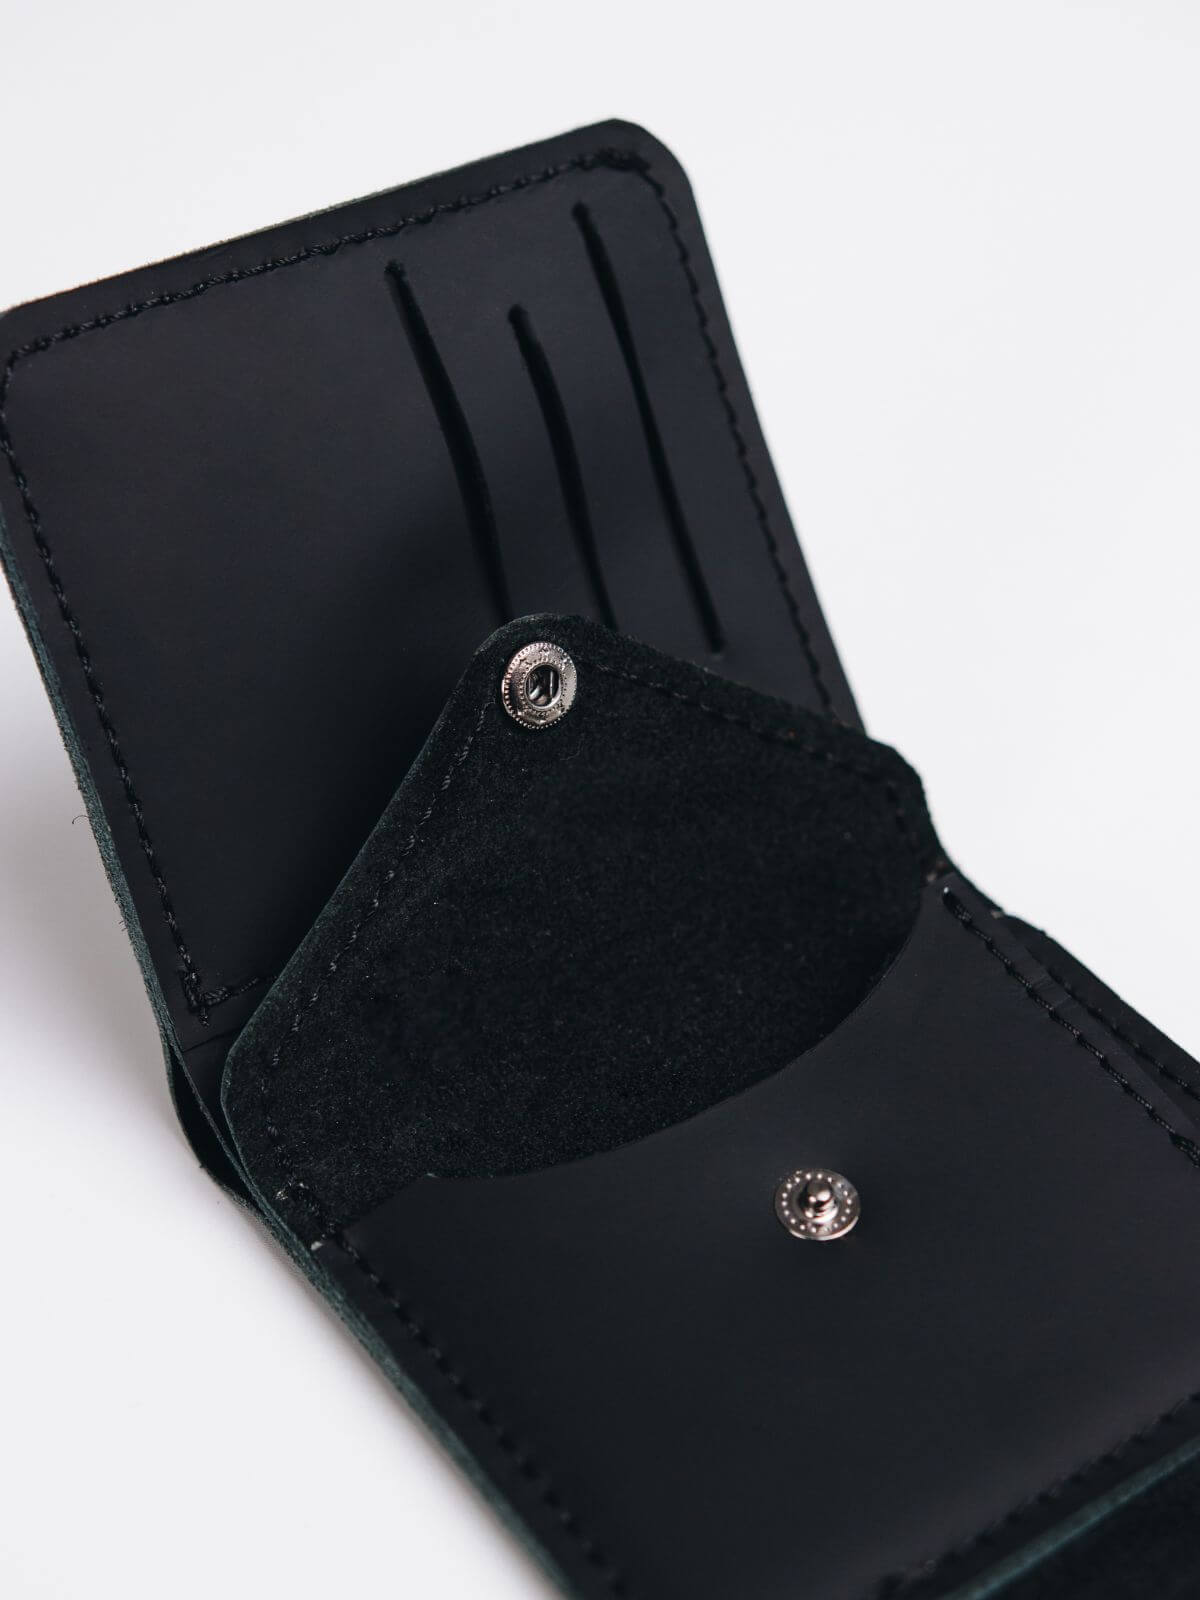 leather black wallet